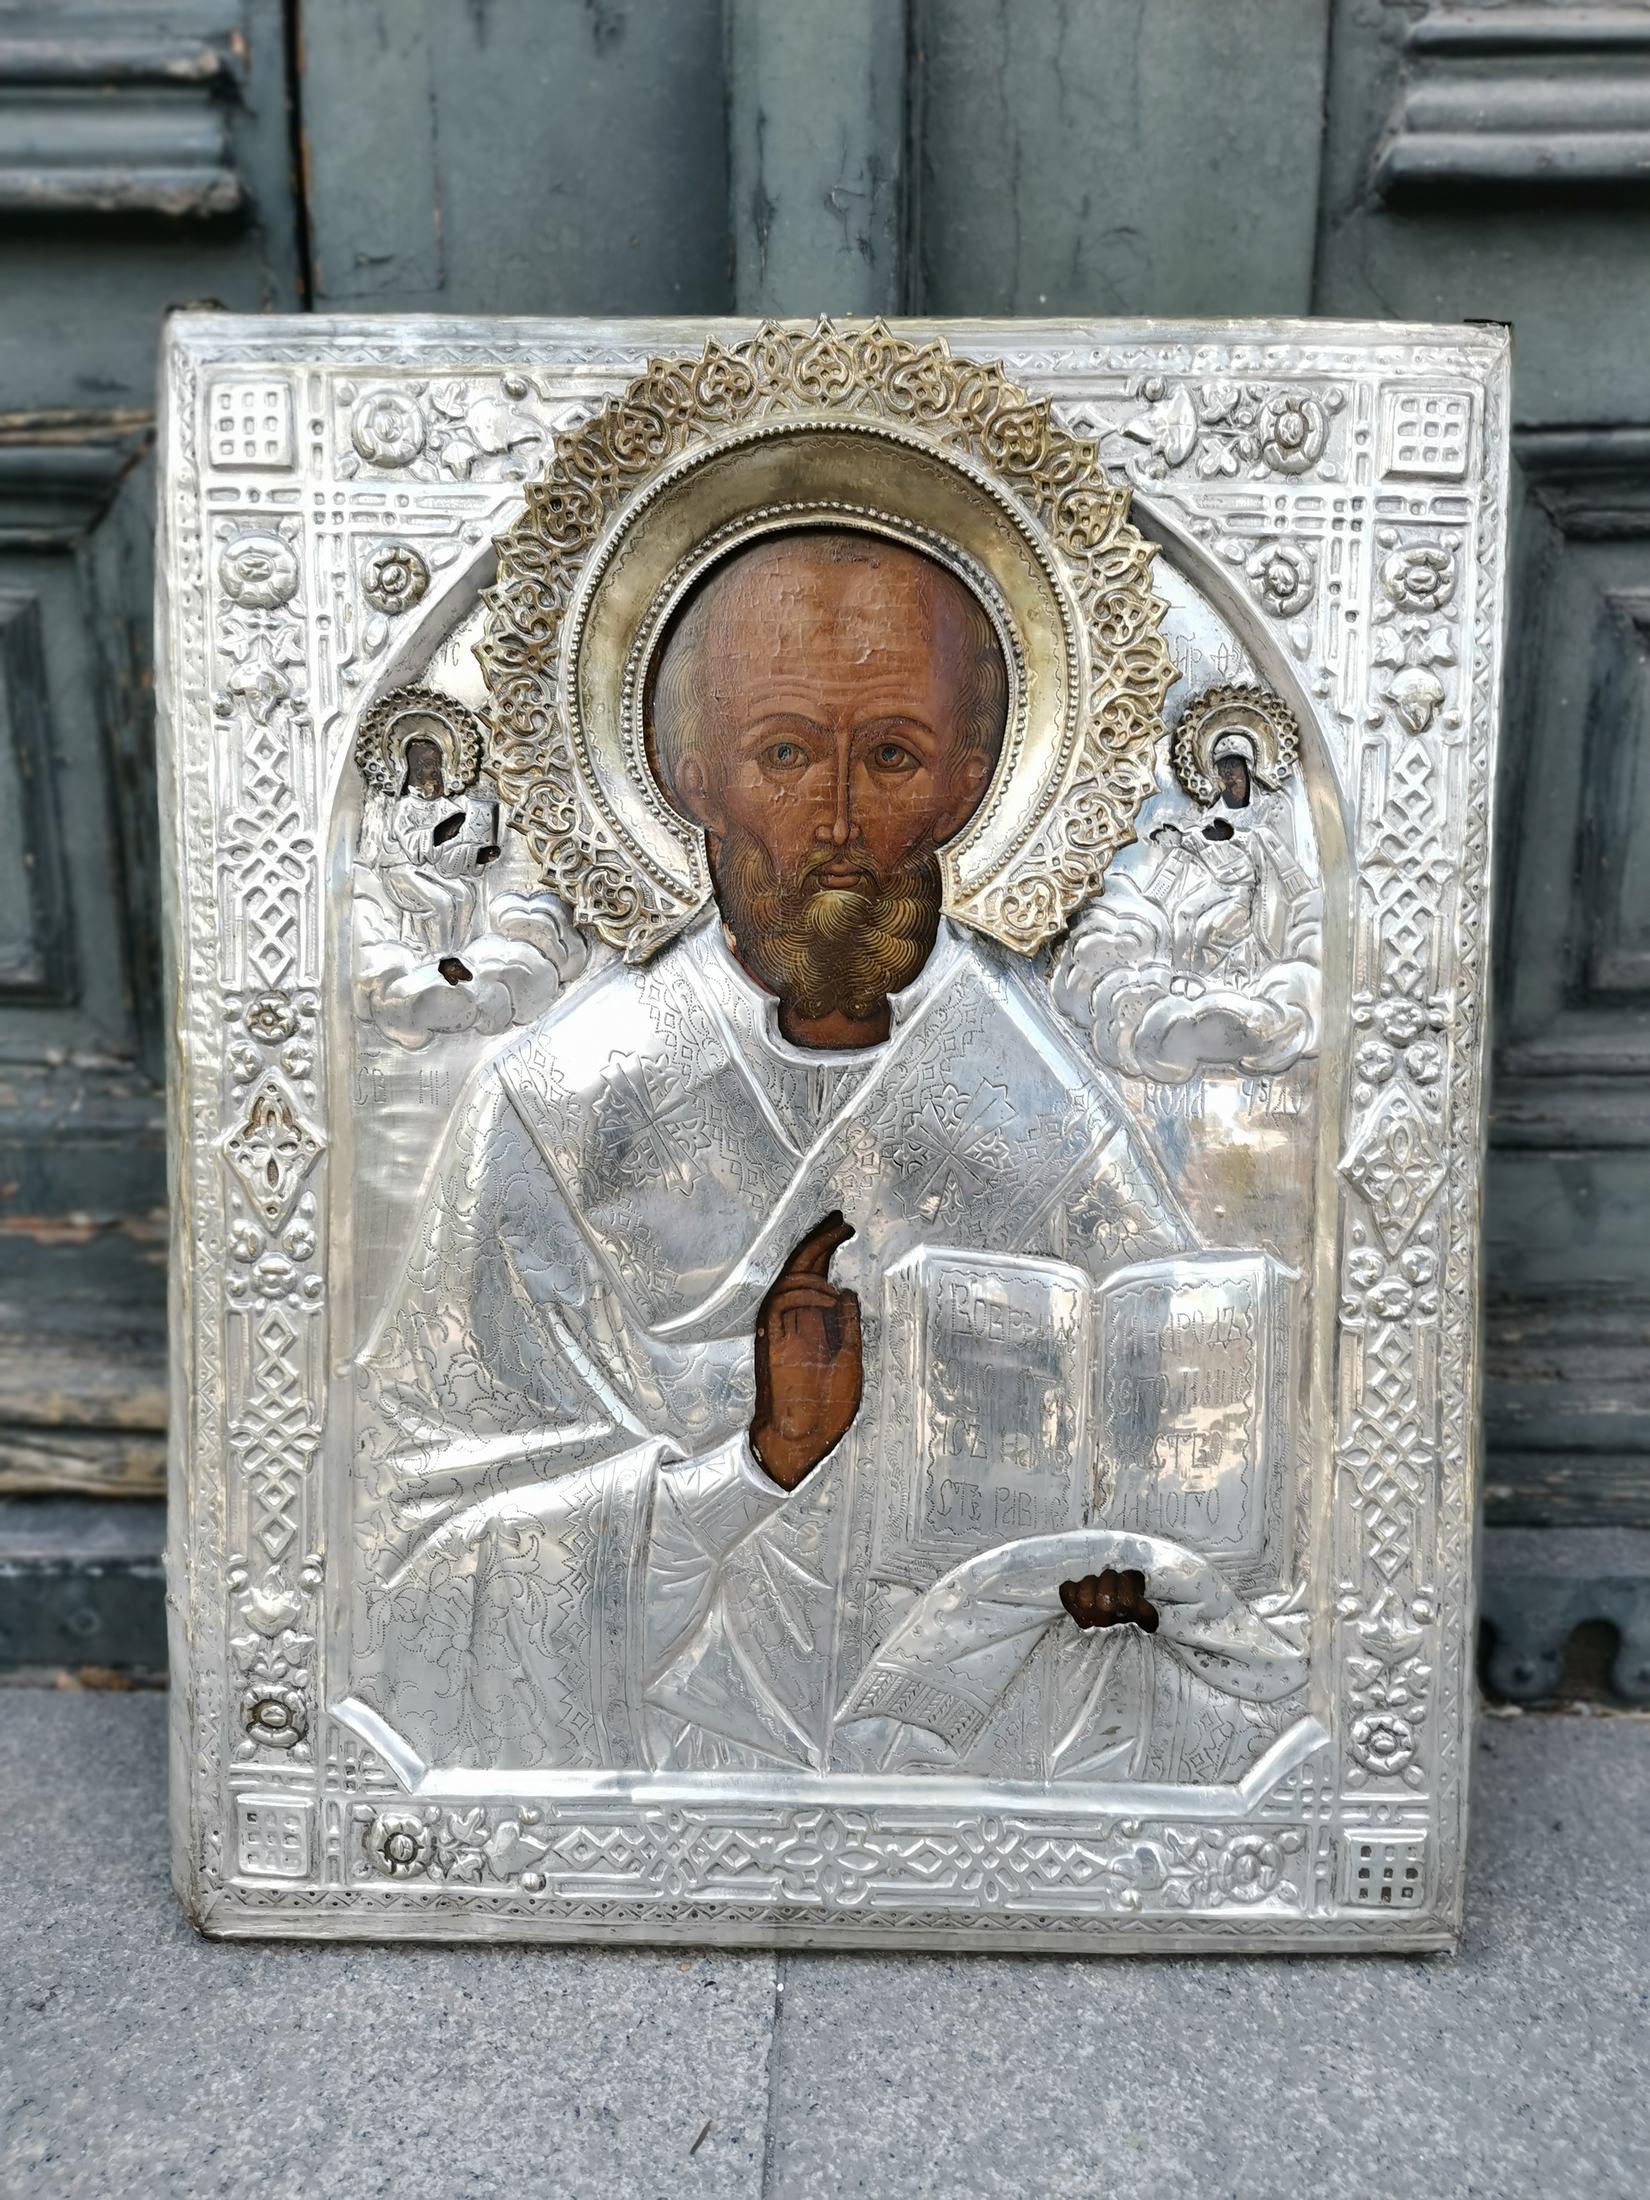 Big Russian Icon 19th Century
Good condition 
Measures: 54 x 42 cm 
Good condition.